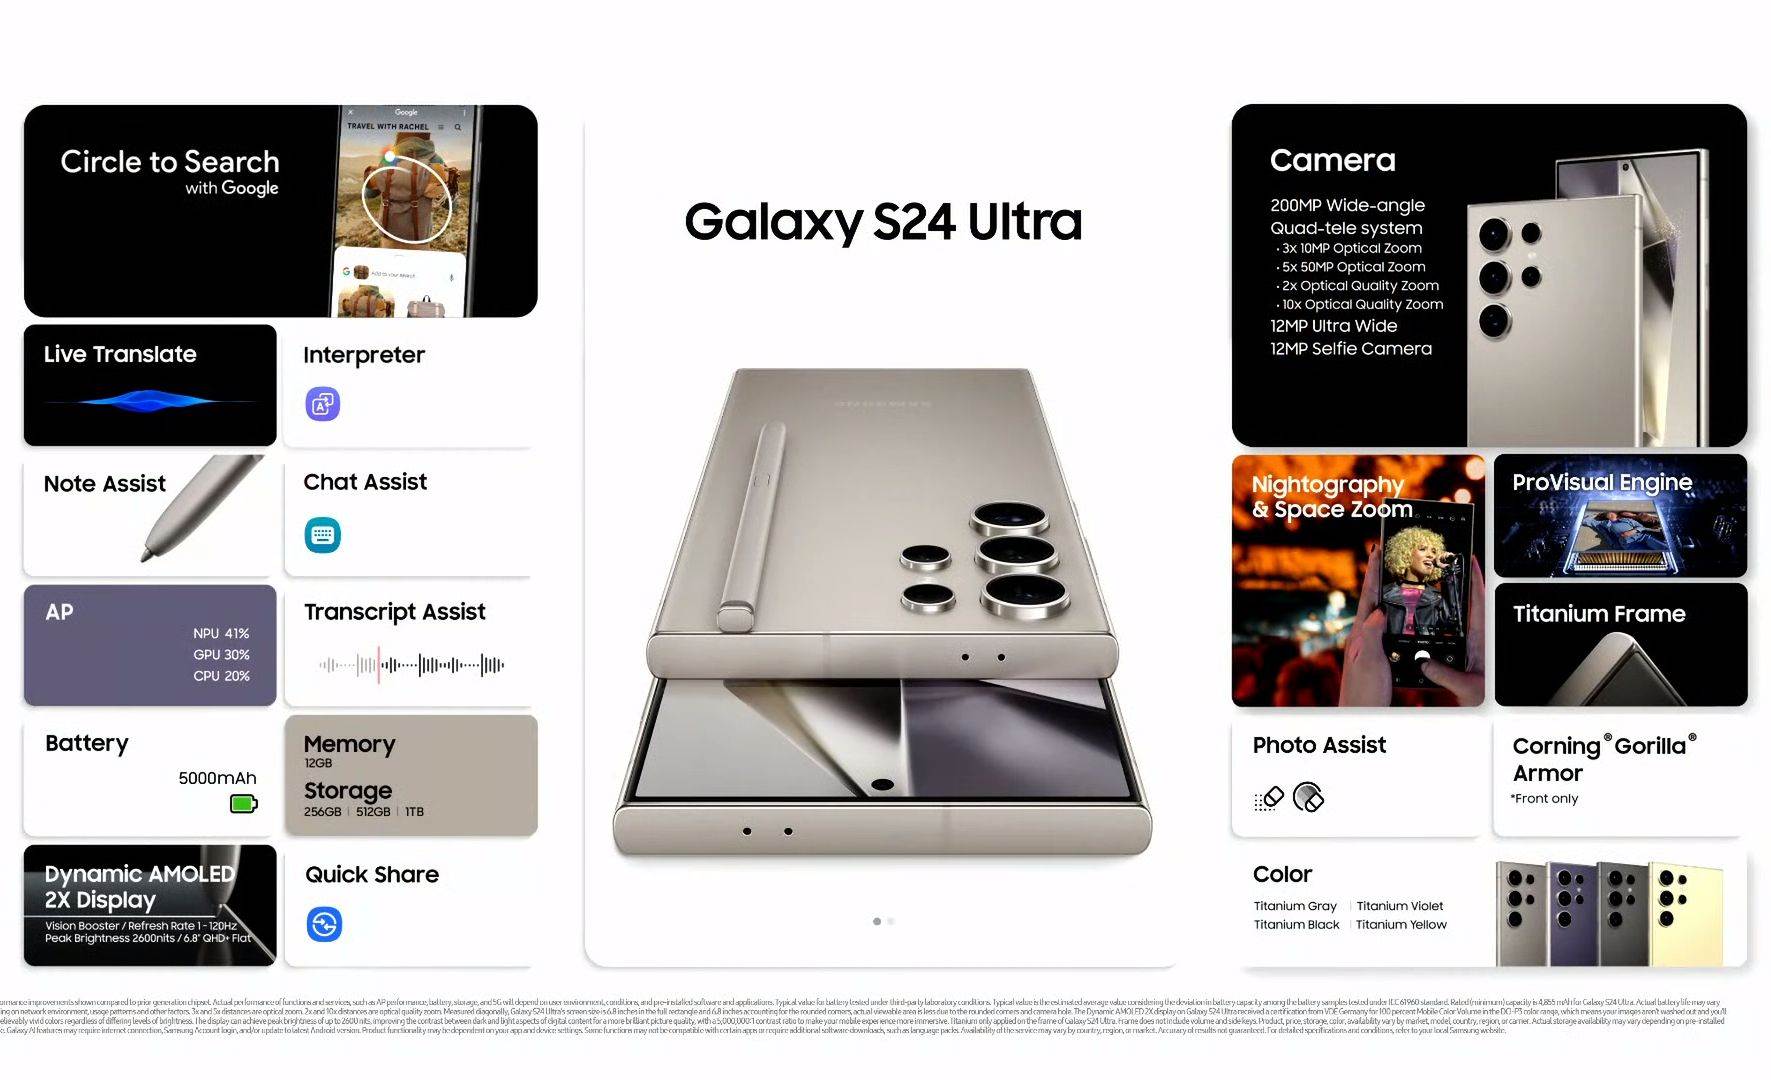  Samsung Galaxy S24 Ultra specifikacije.jpg 